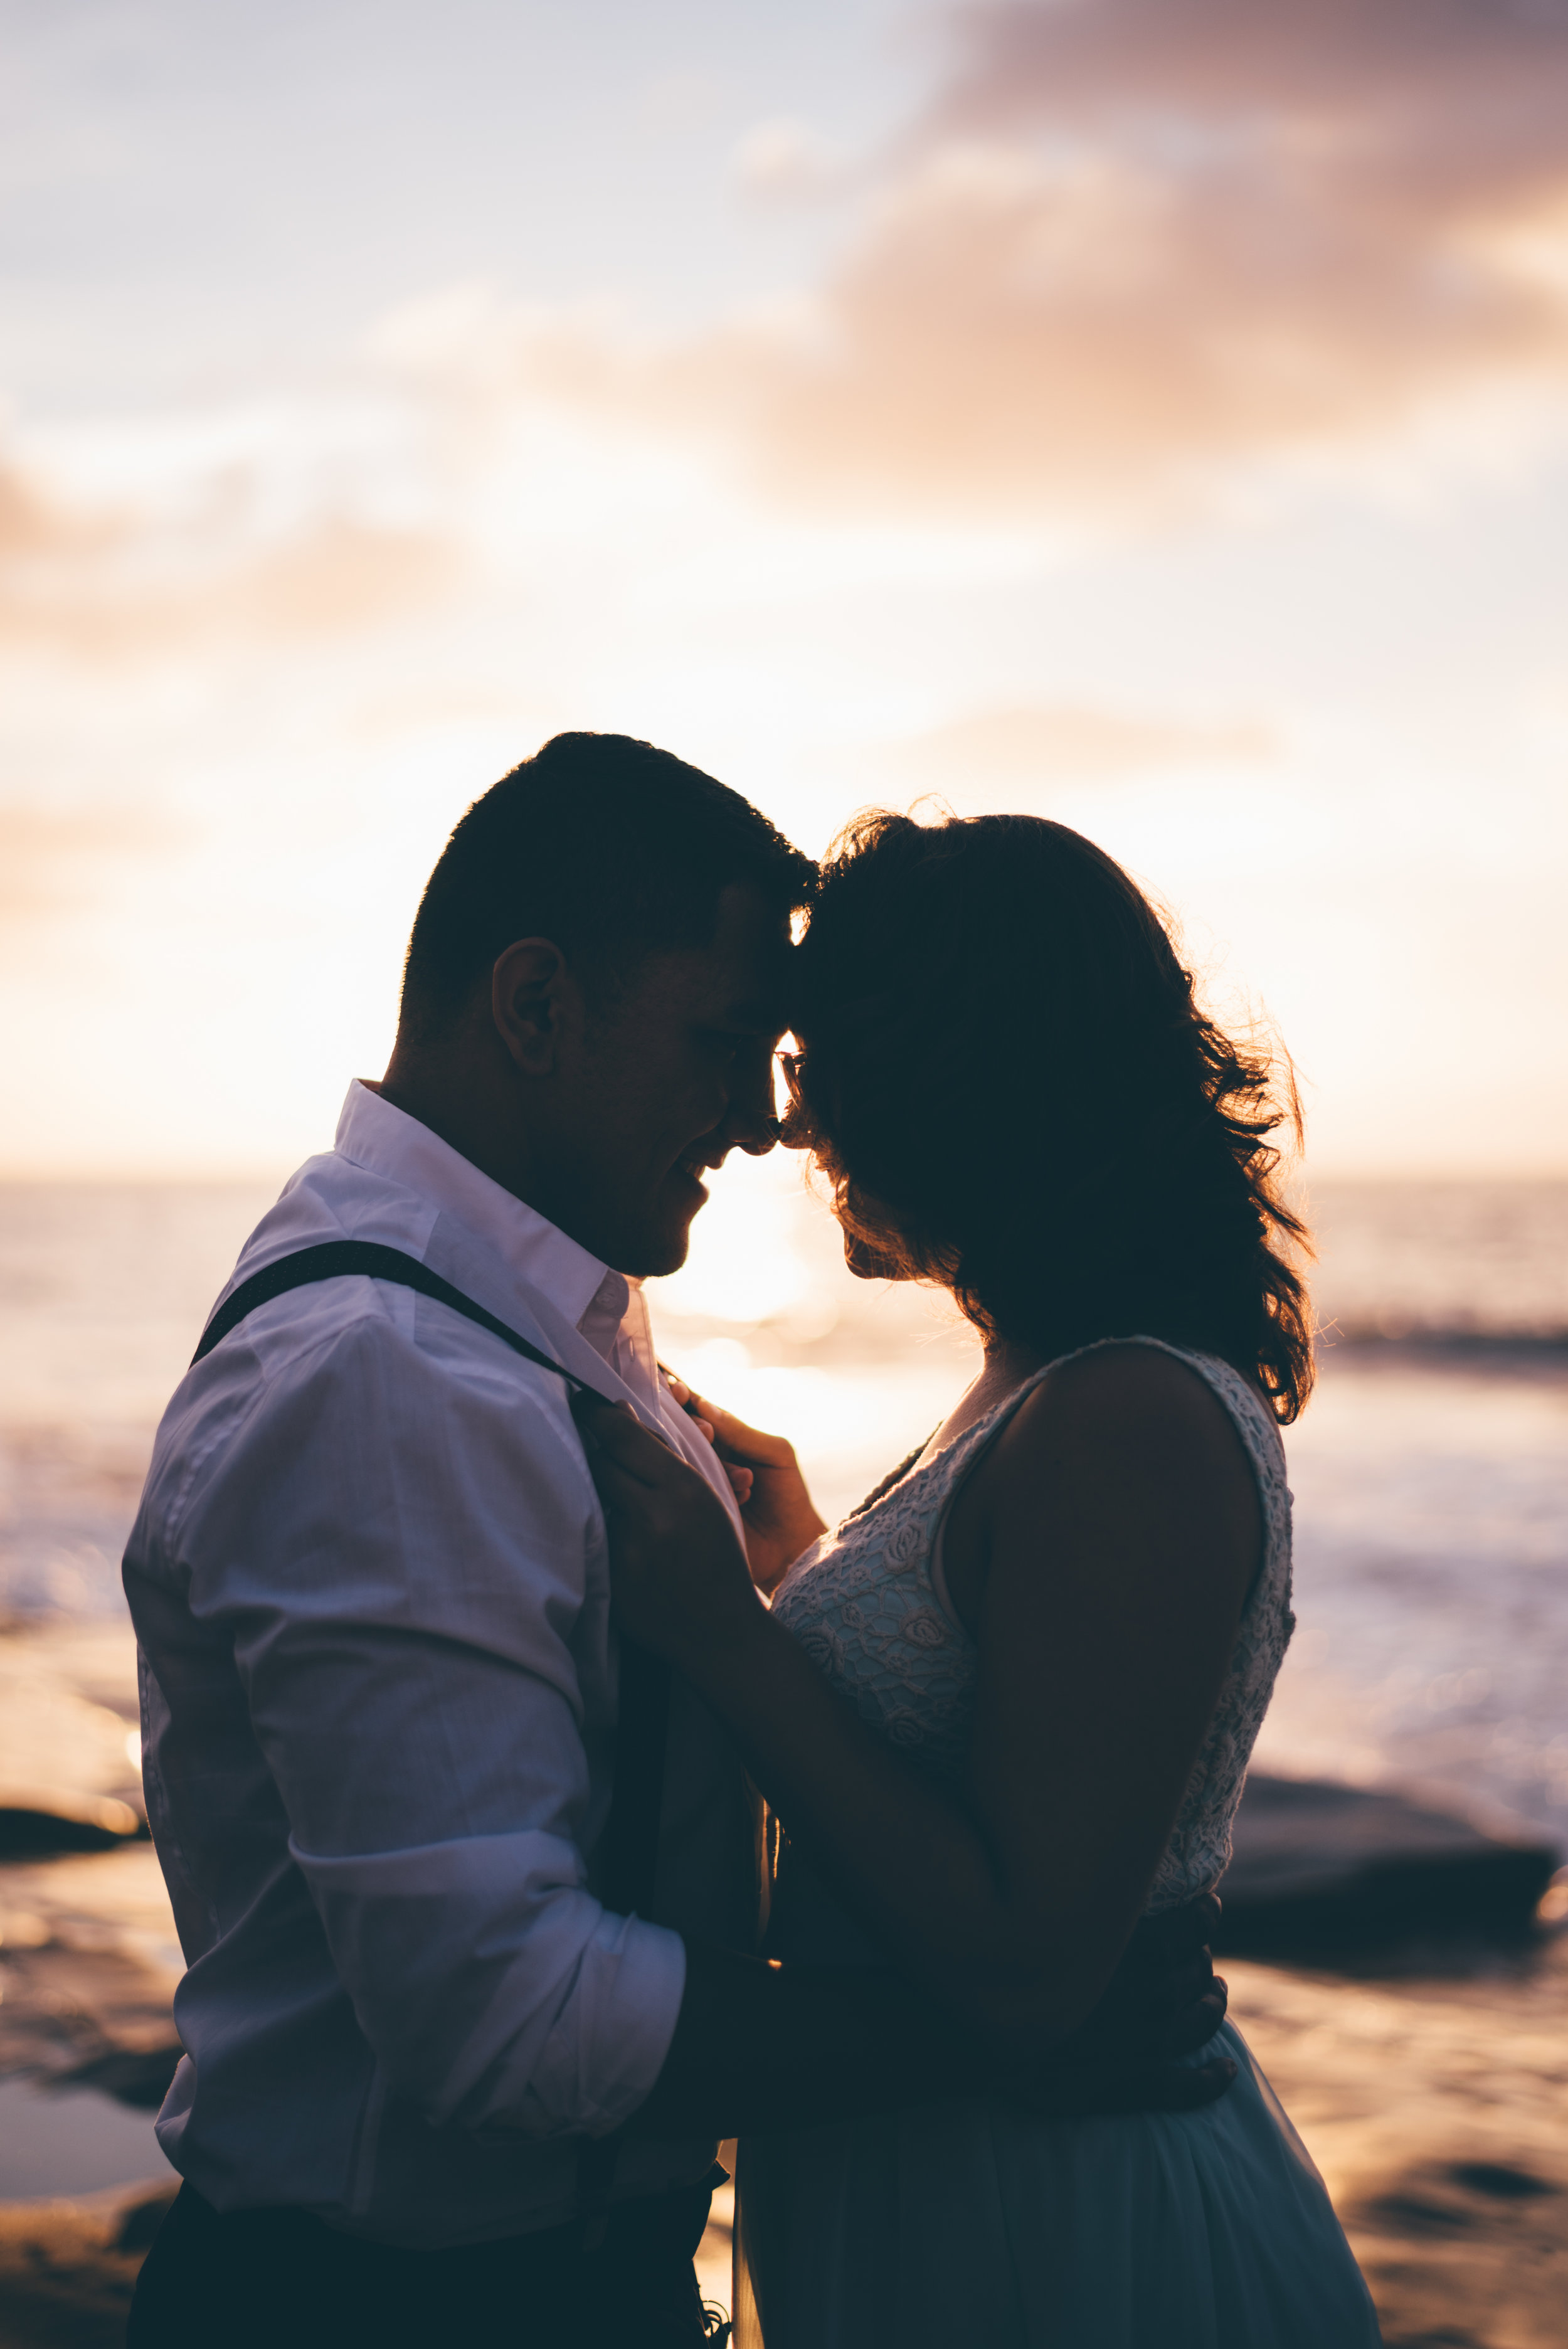 Couples Beach Silhouette 